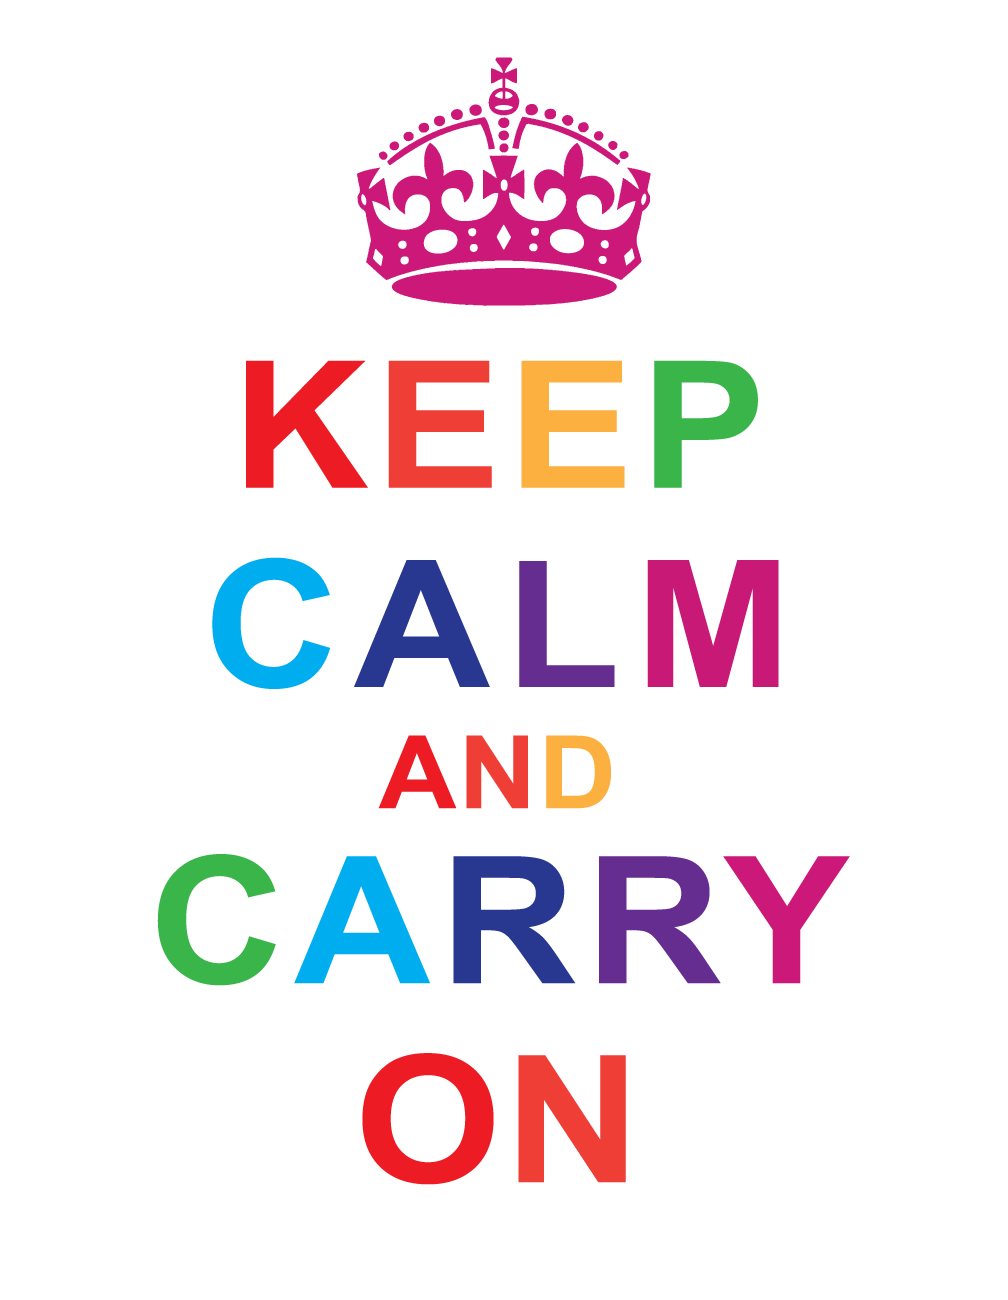 Free Keep Calm Logo, Download Free Keep Calm Logo png images, Free